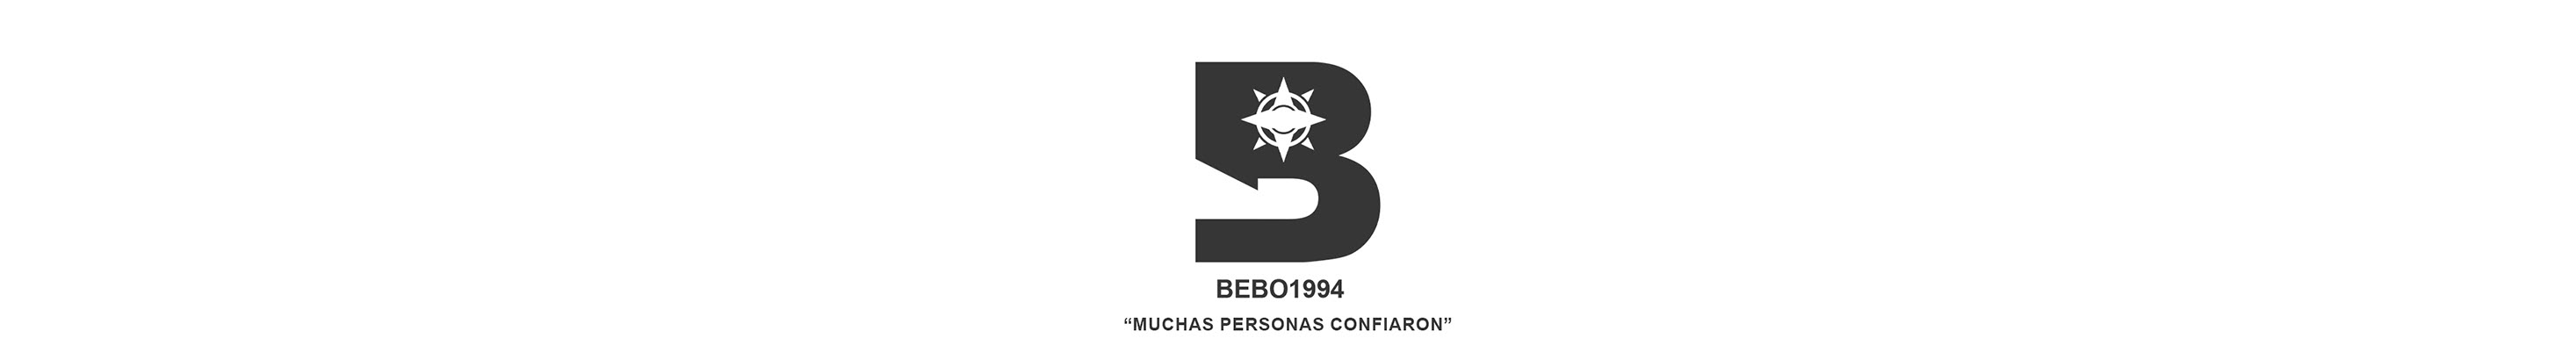 xBebo1994x Design's profile banner